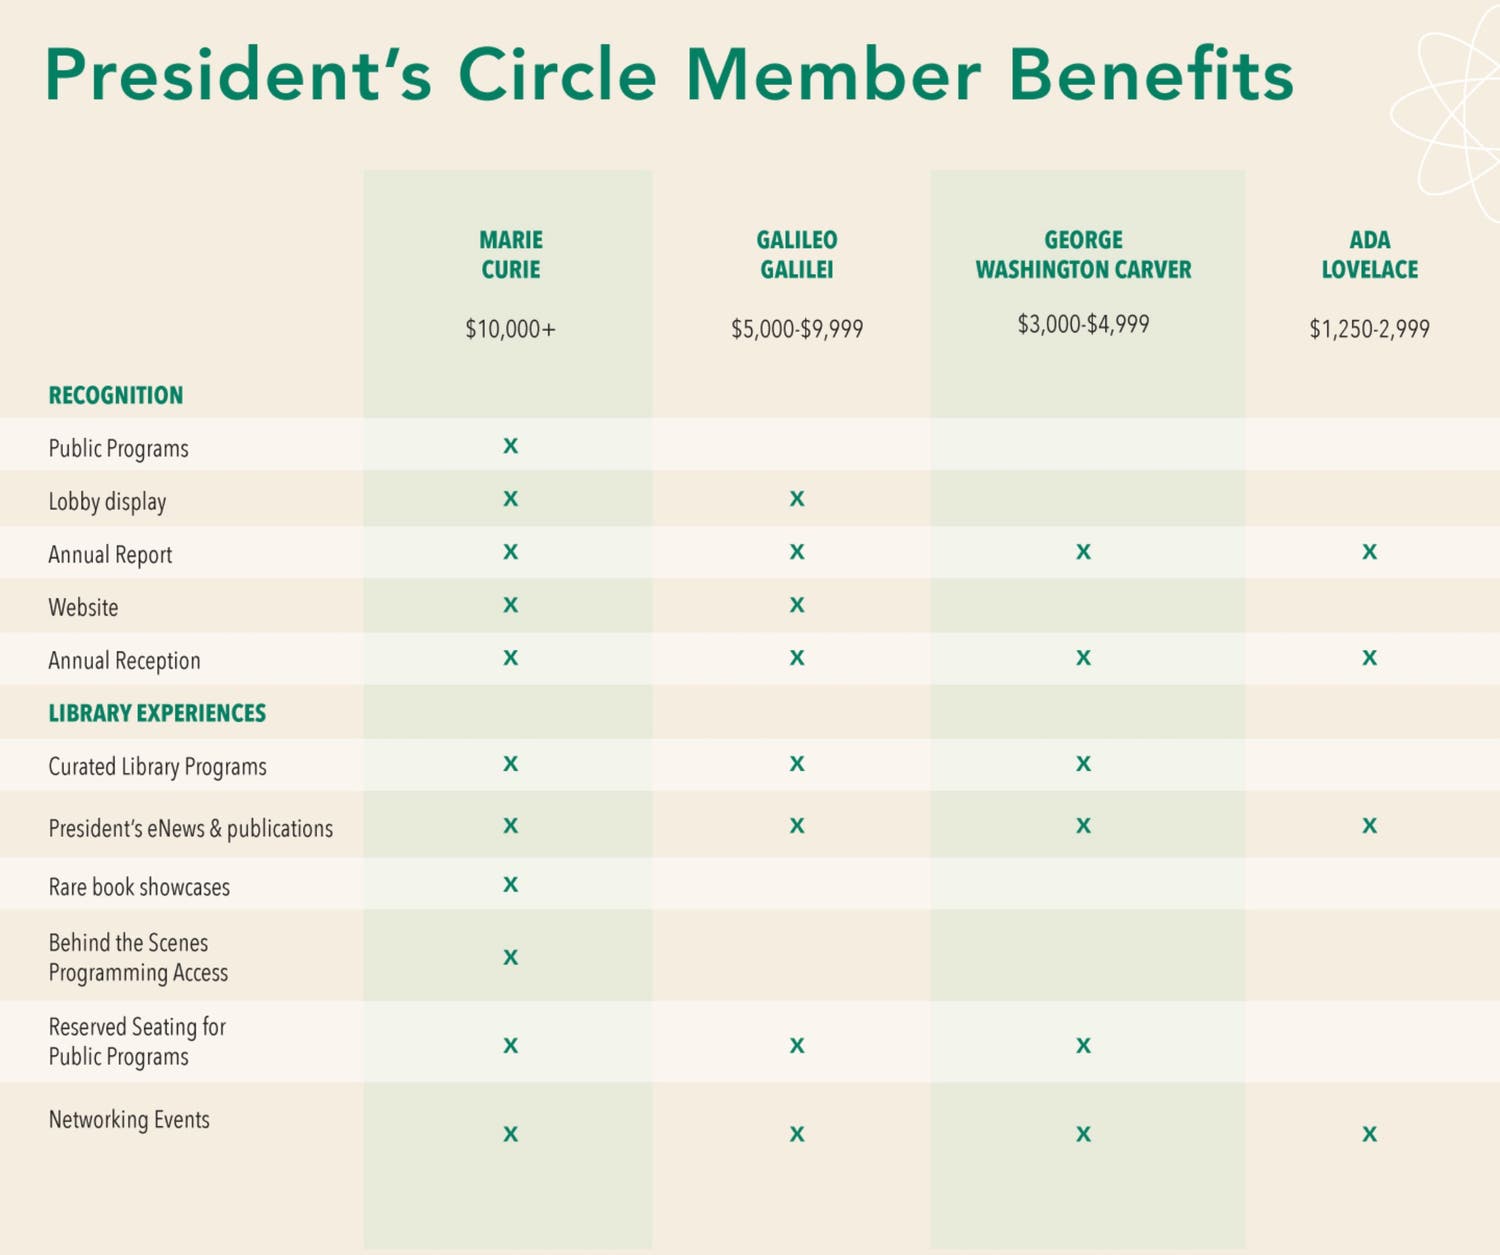 President's Circle Member Benefits table